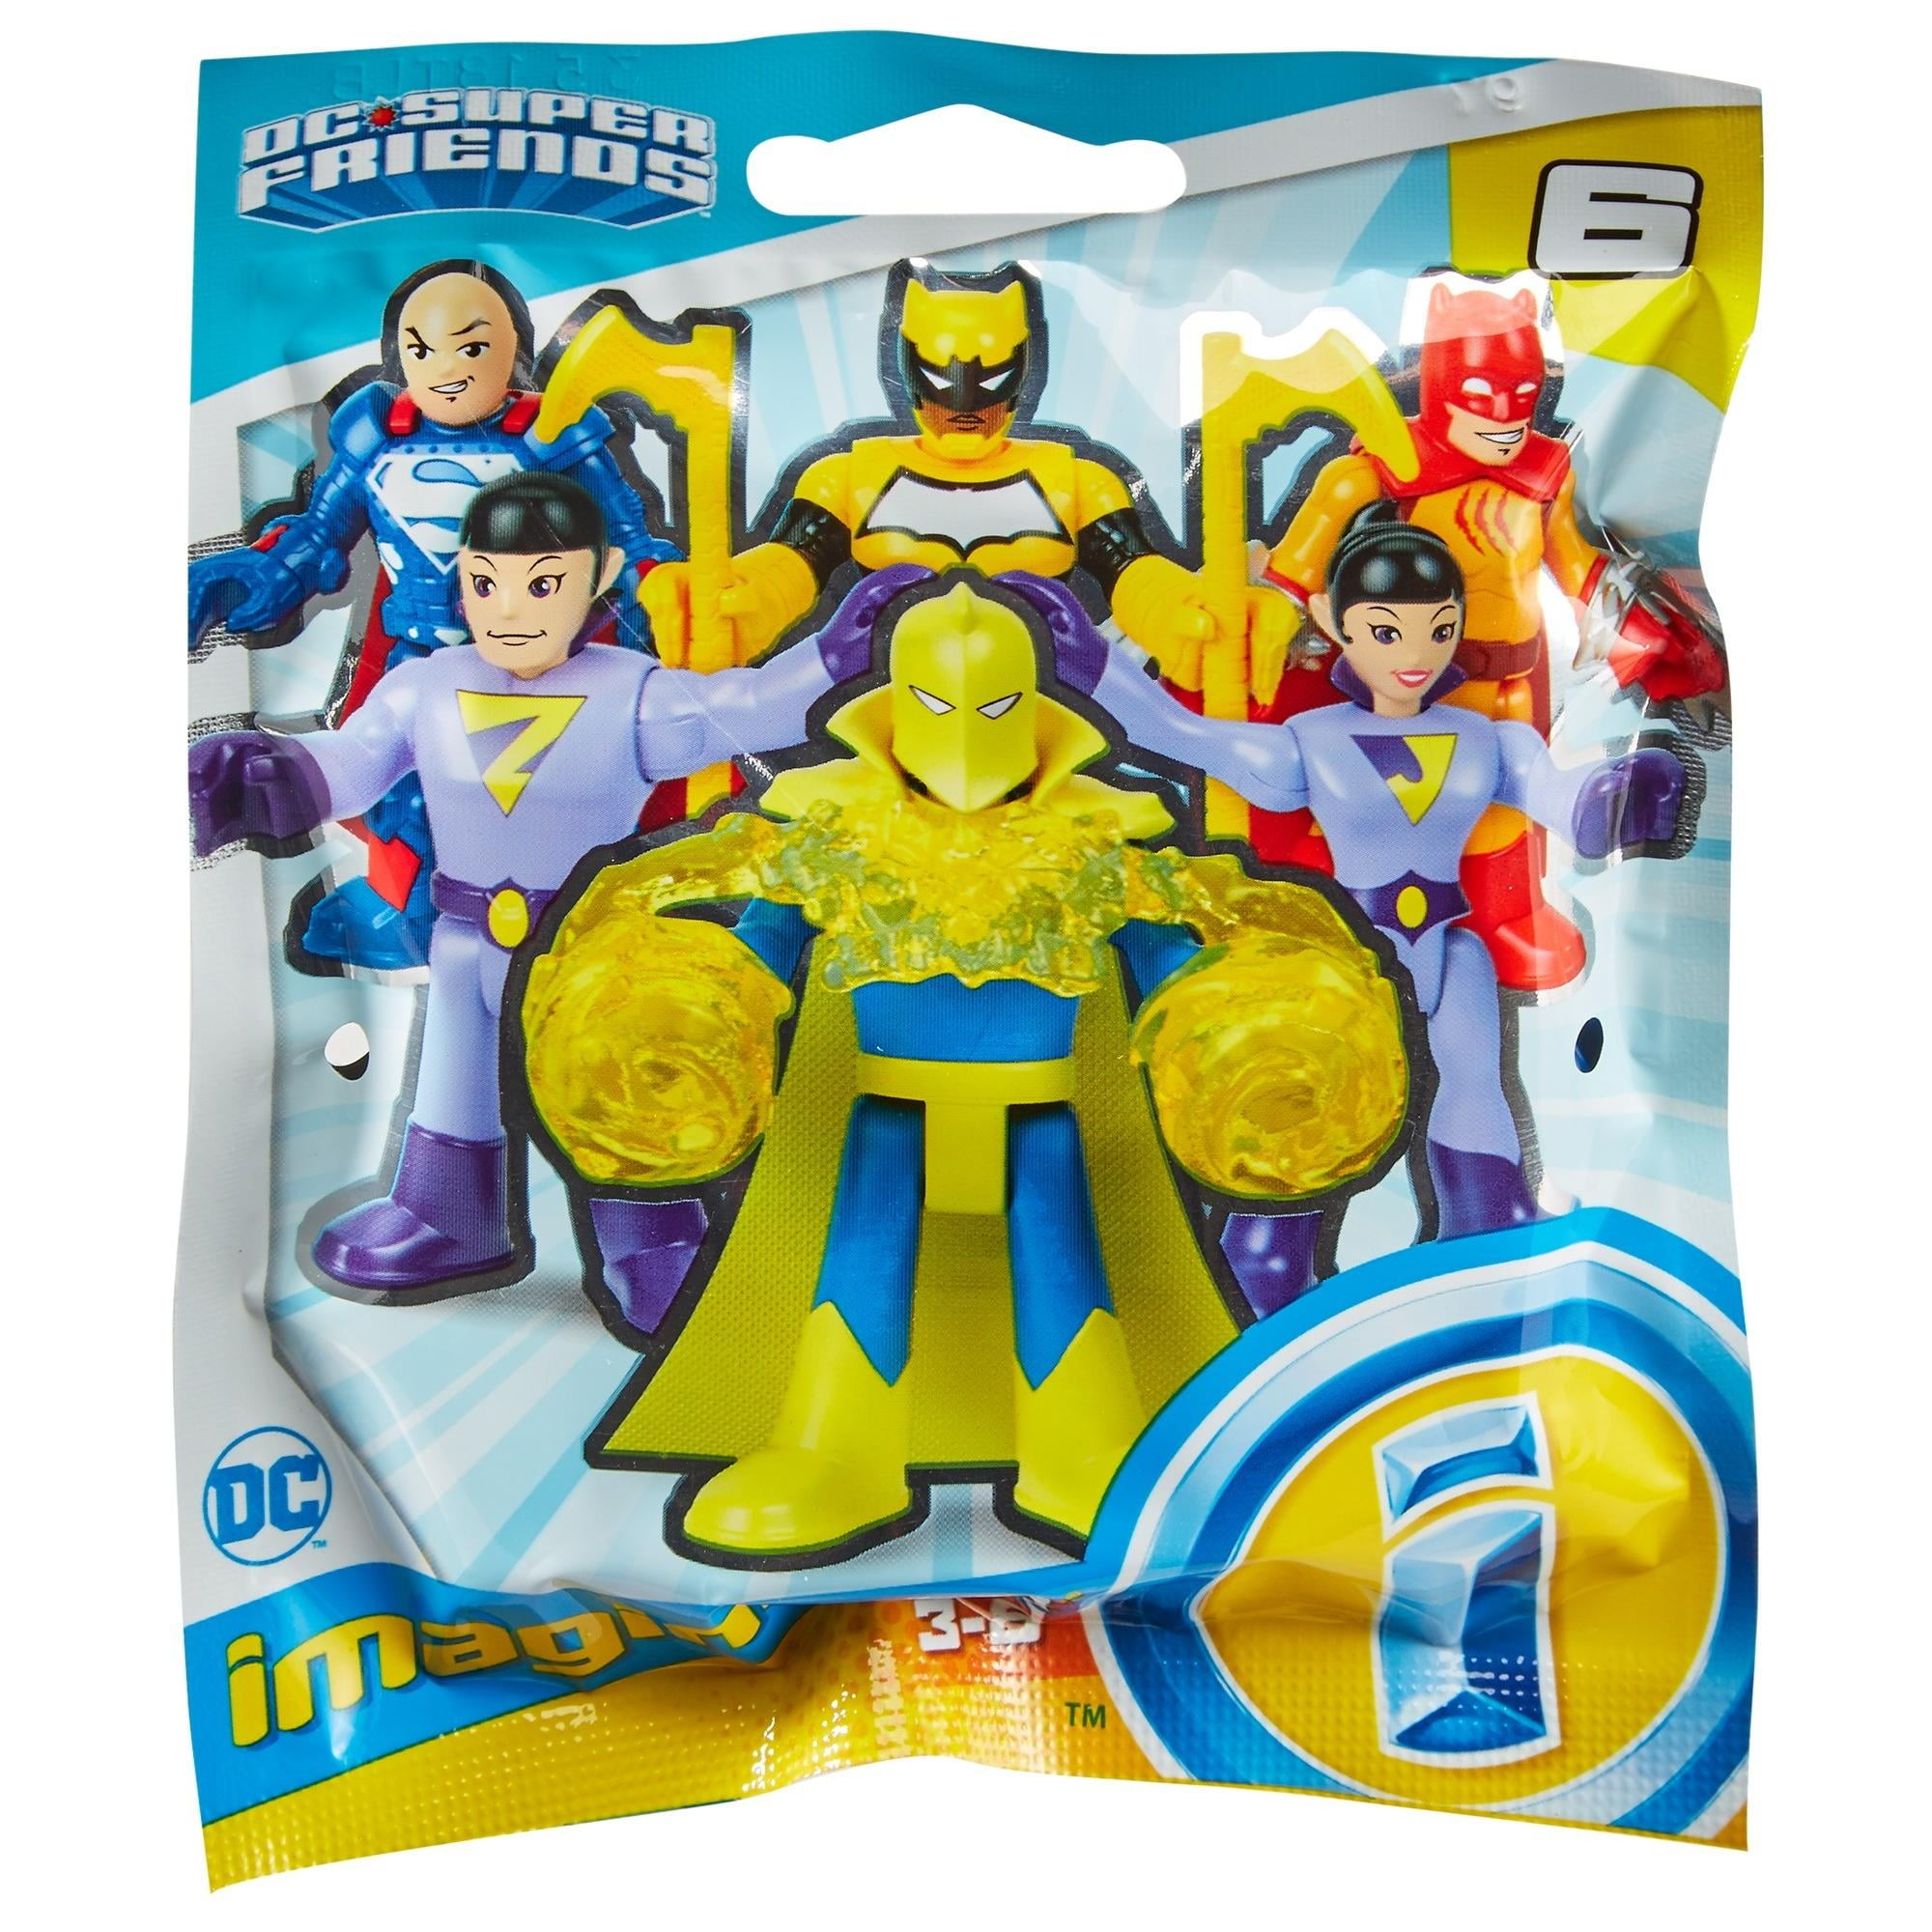 Exclusive Fisher-Price Imaginext DC Super Friends Super-hero Showdown Figure Set 